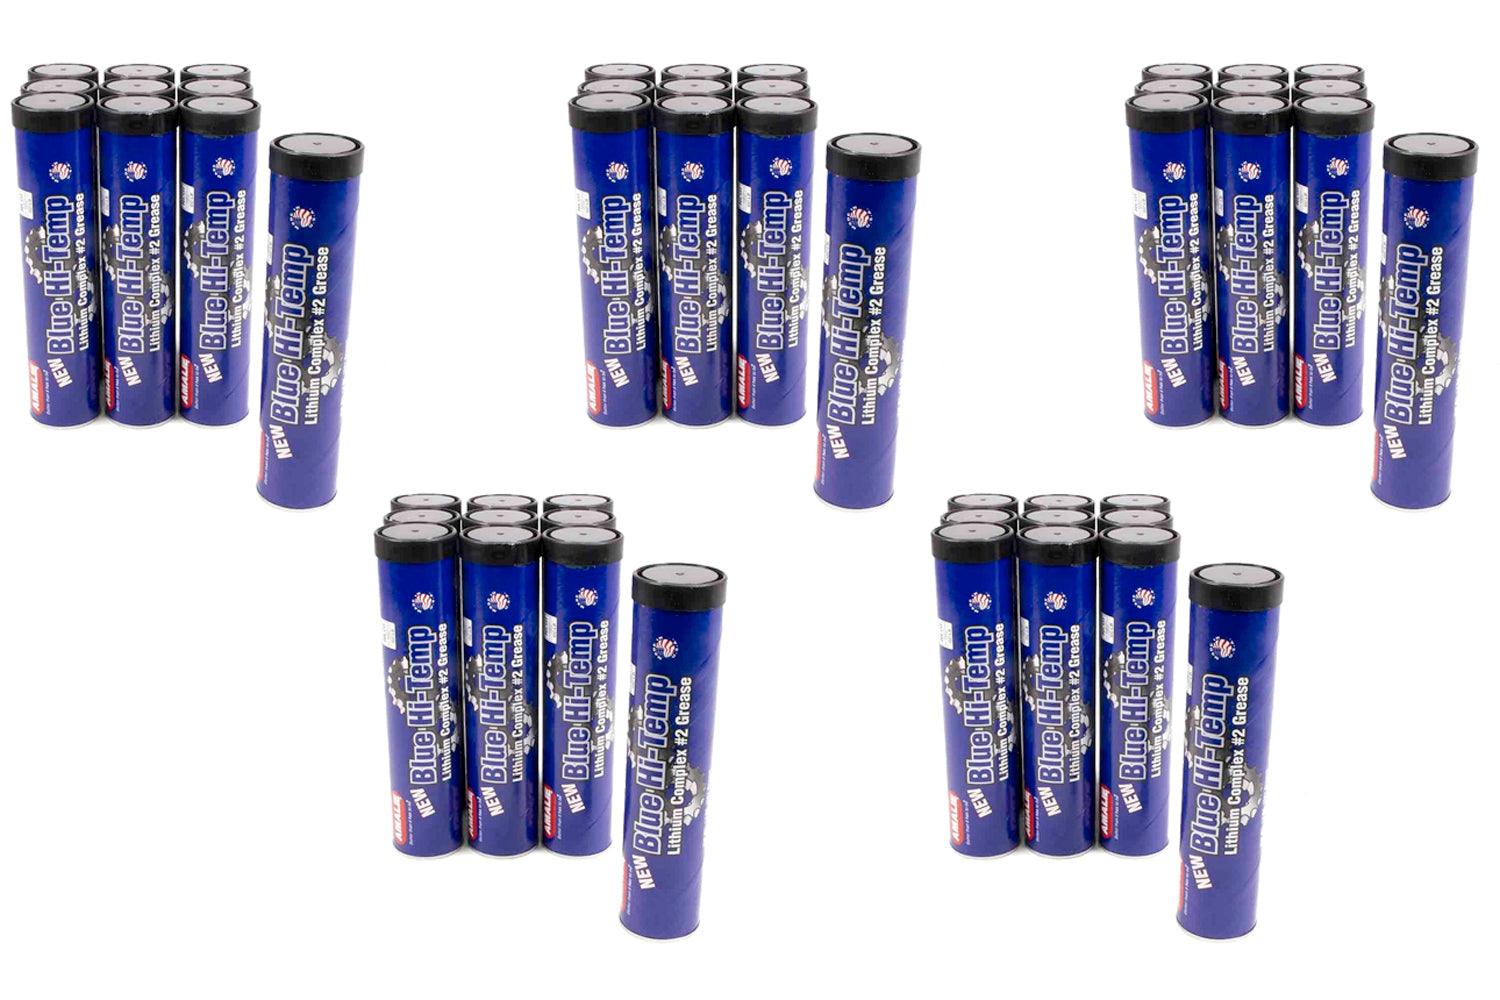 Blue Hi-Temp Grease #2 Case 50 x 14 Oz - Burlile Performance Products